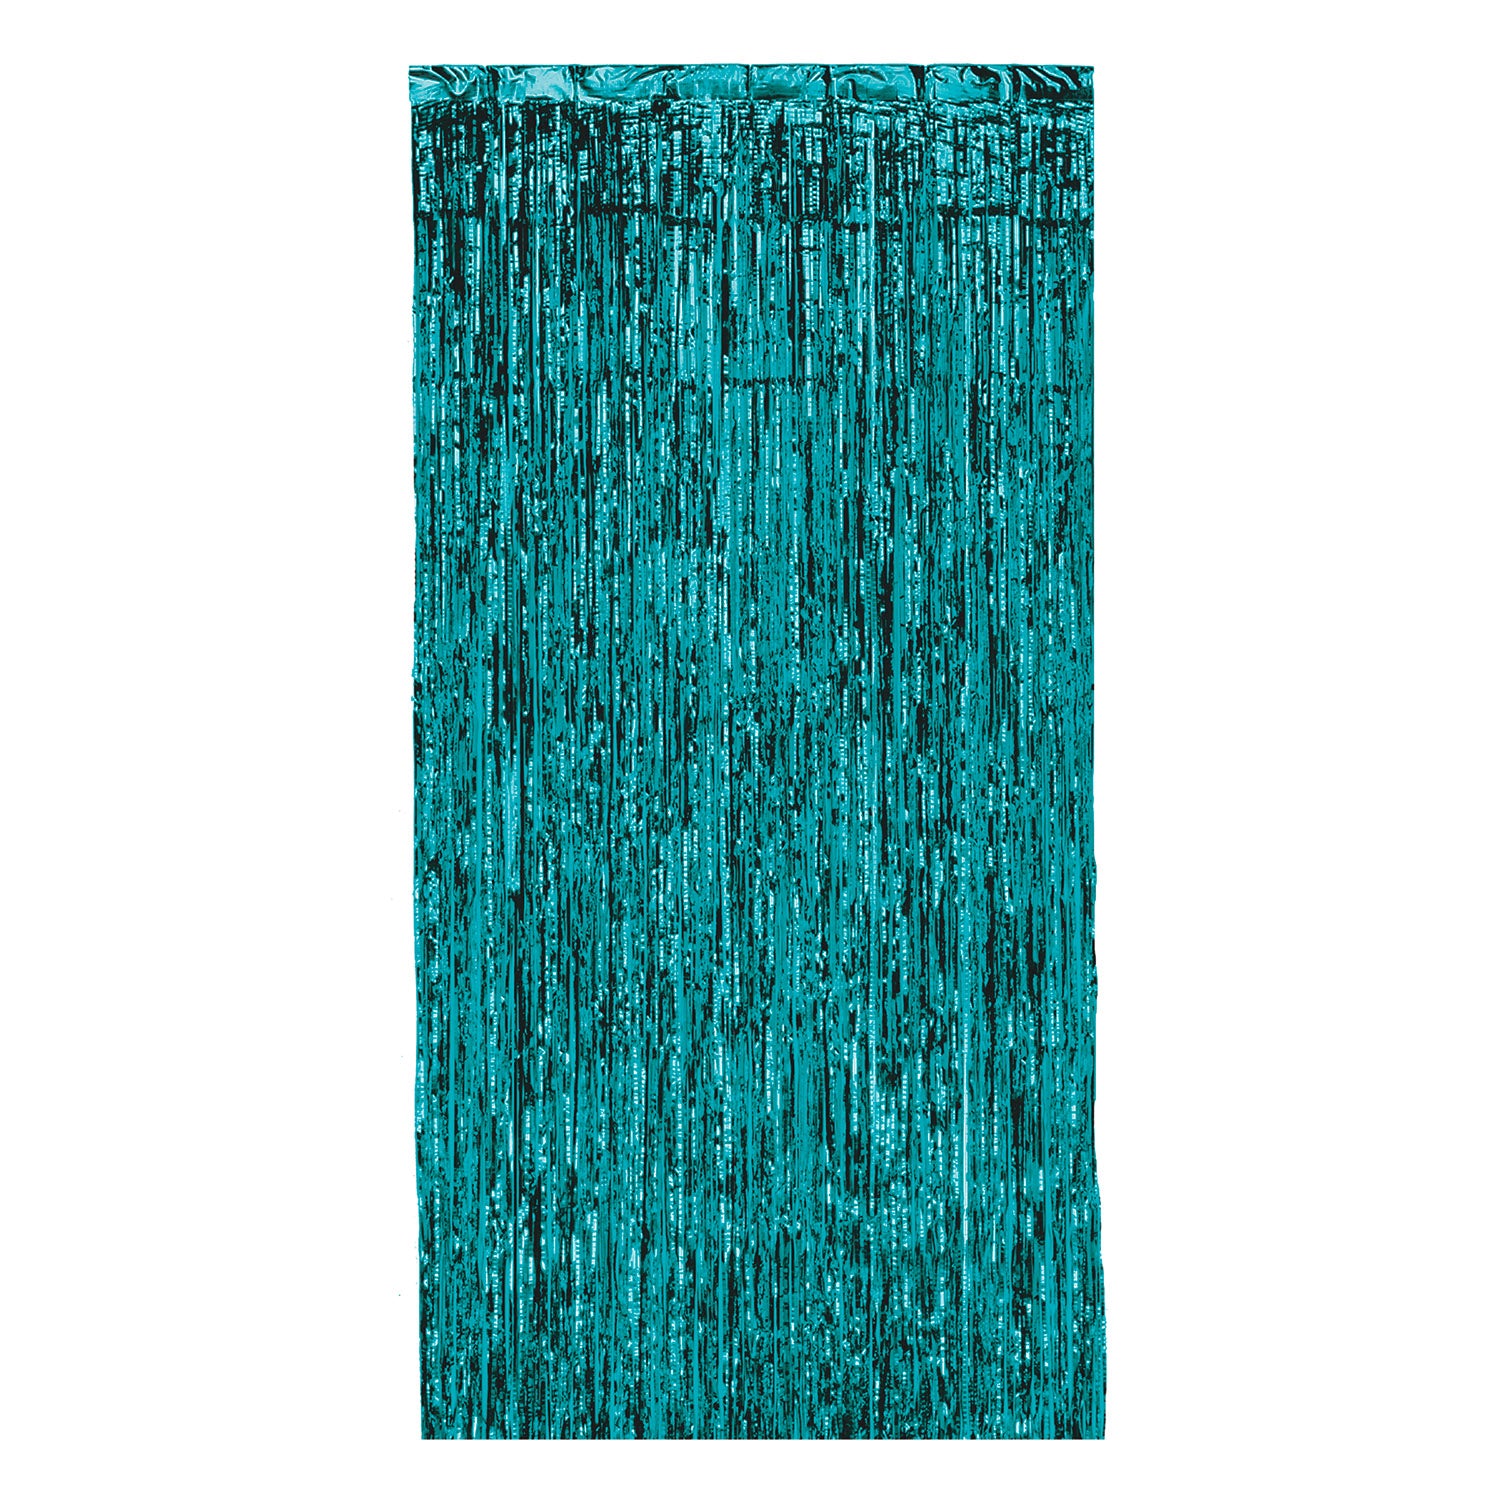 Gleam 'N Curtain | 8' x 3'- Foil Curtain Backdrop